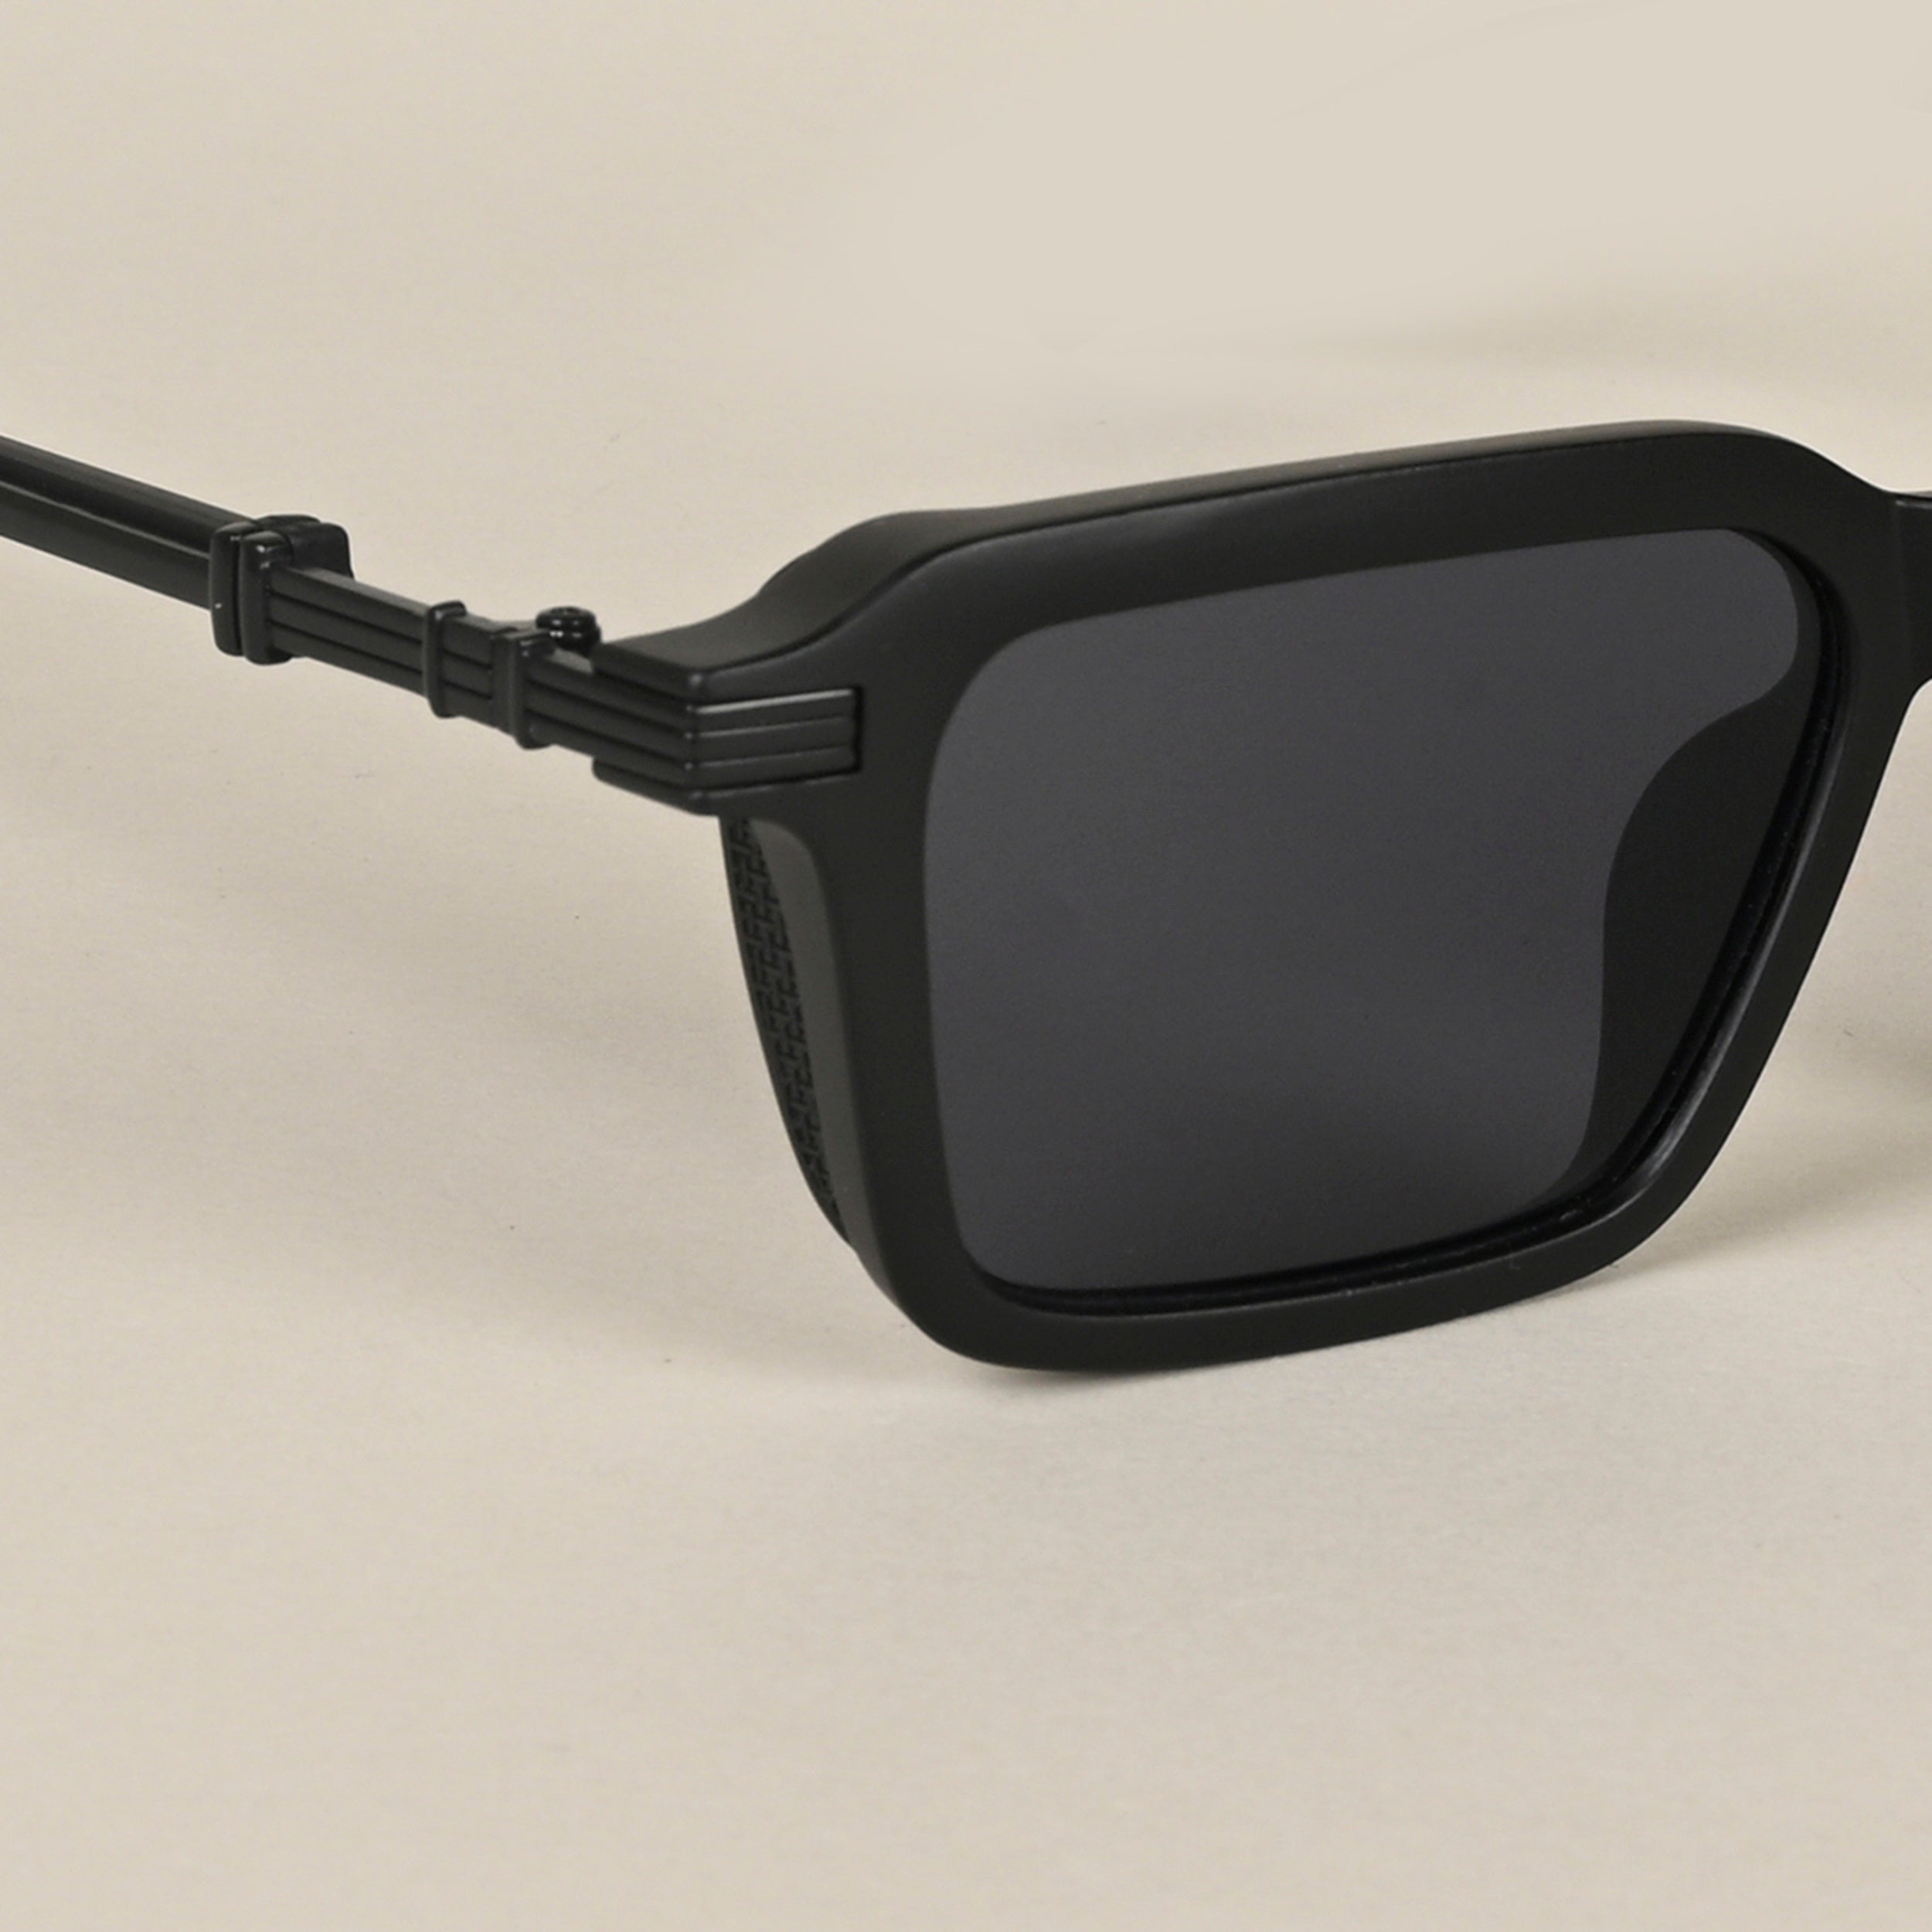 Voyage Black Wayfarer Sunglasses for Men & Women - MG4566